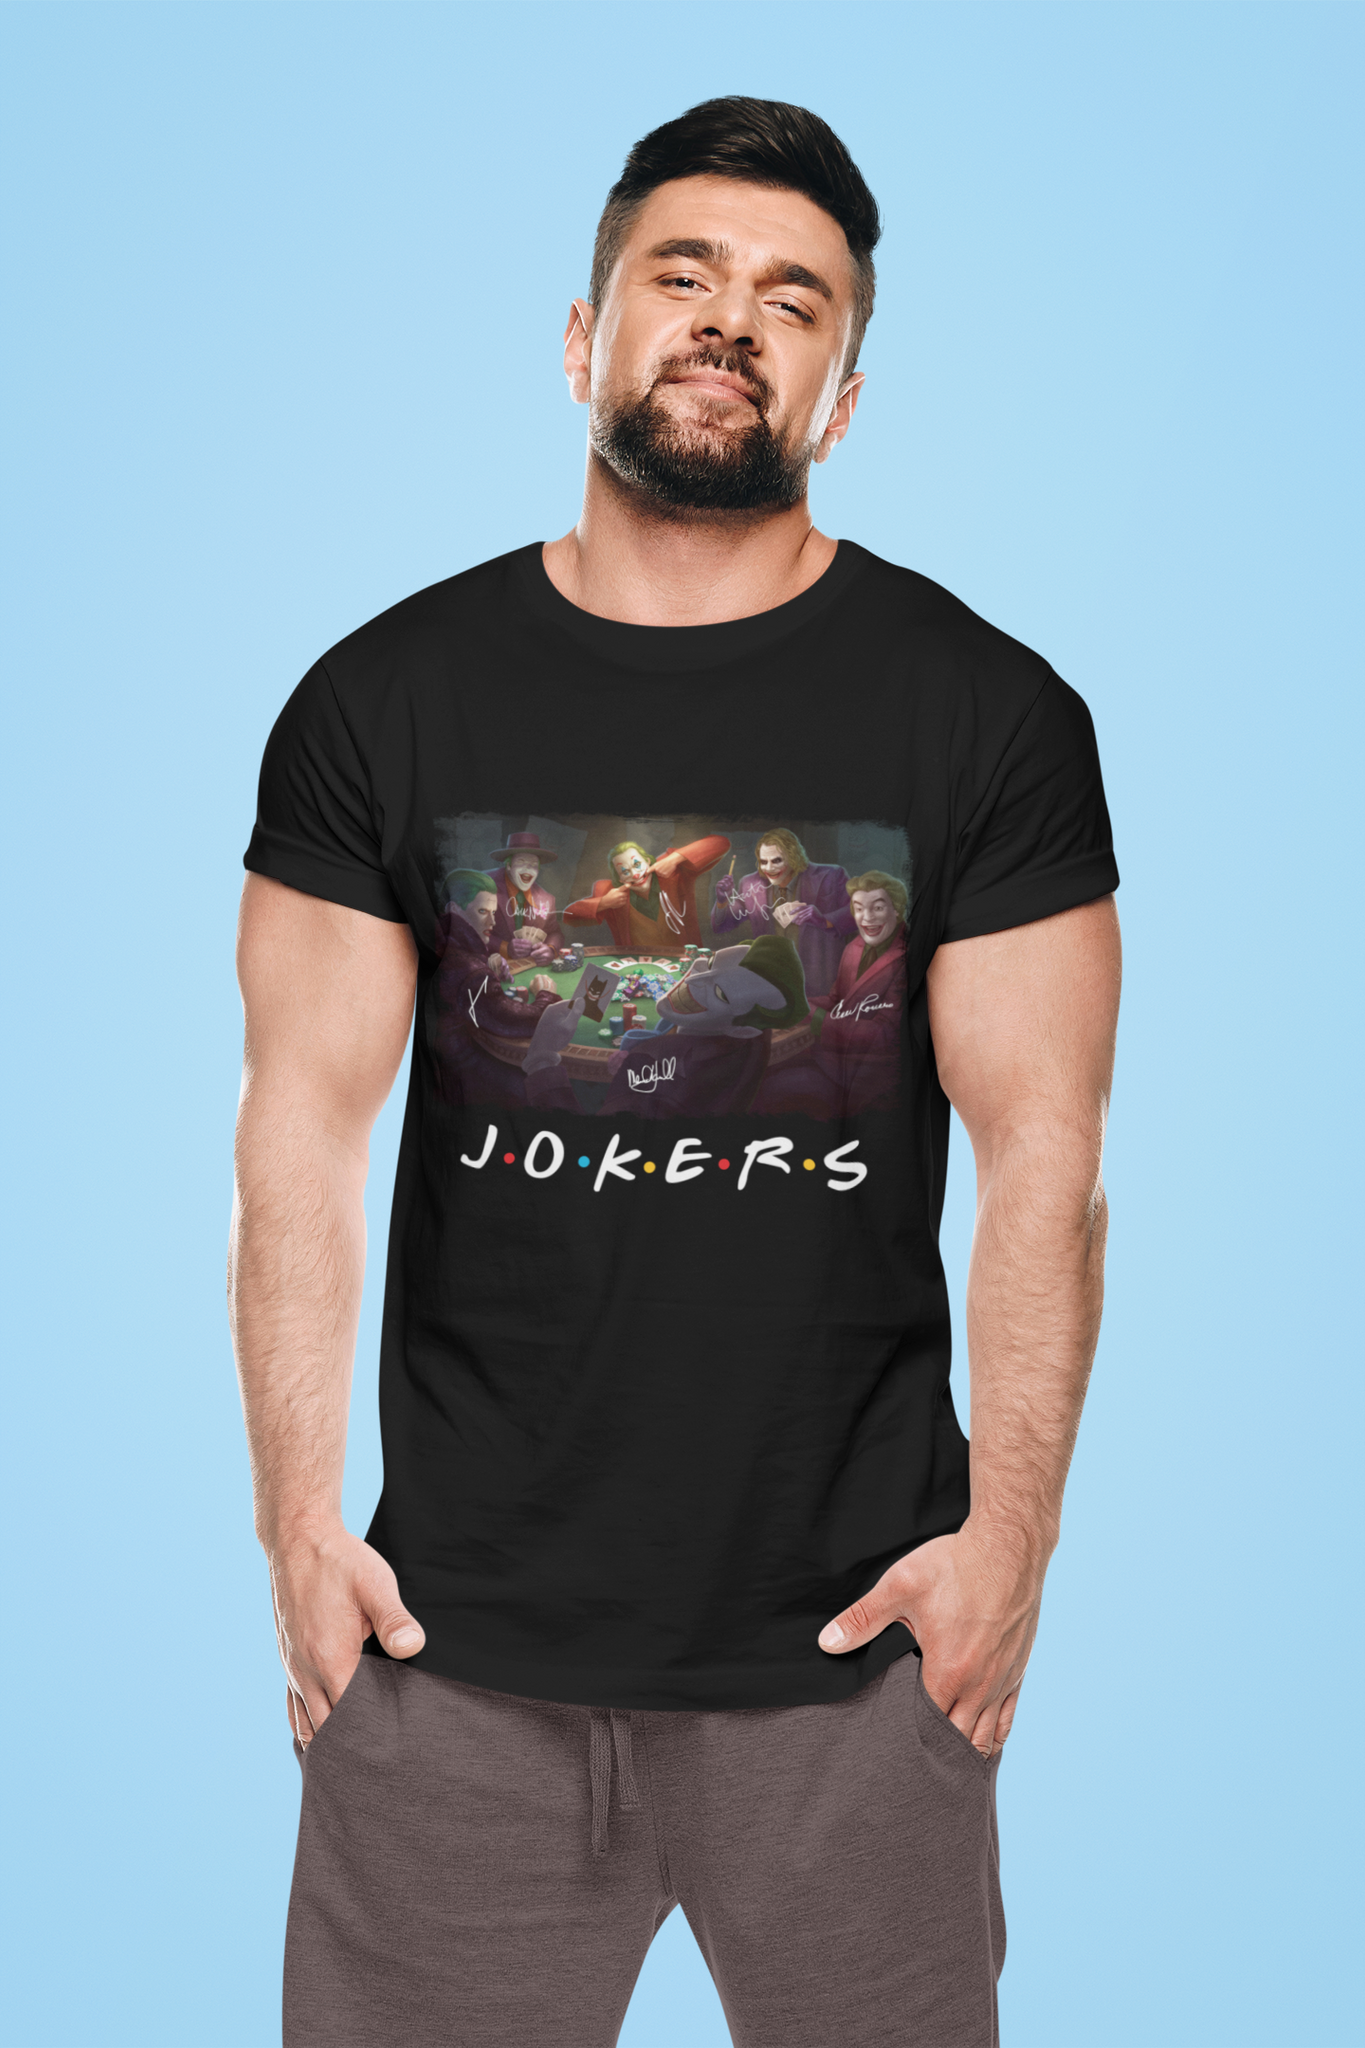 Joker T Shirt, The Maniac Comedian Psychopath Anarchist Clown Gangster Shirt, Jokers Playing Card Tshirt, Halloween Gifts